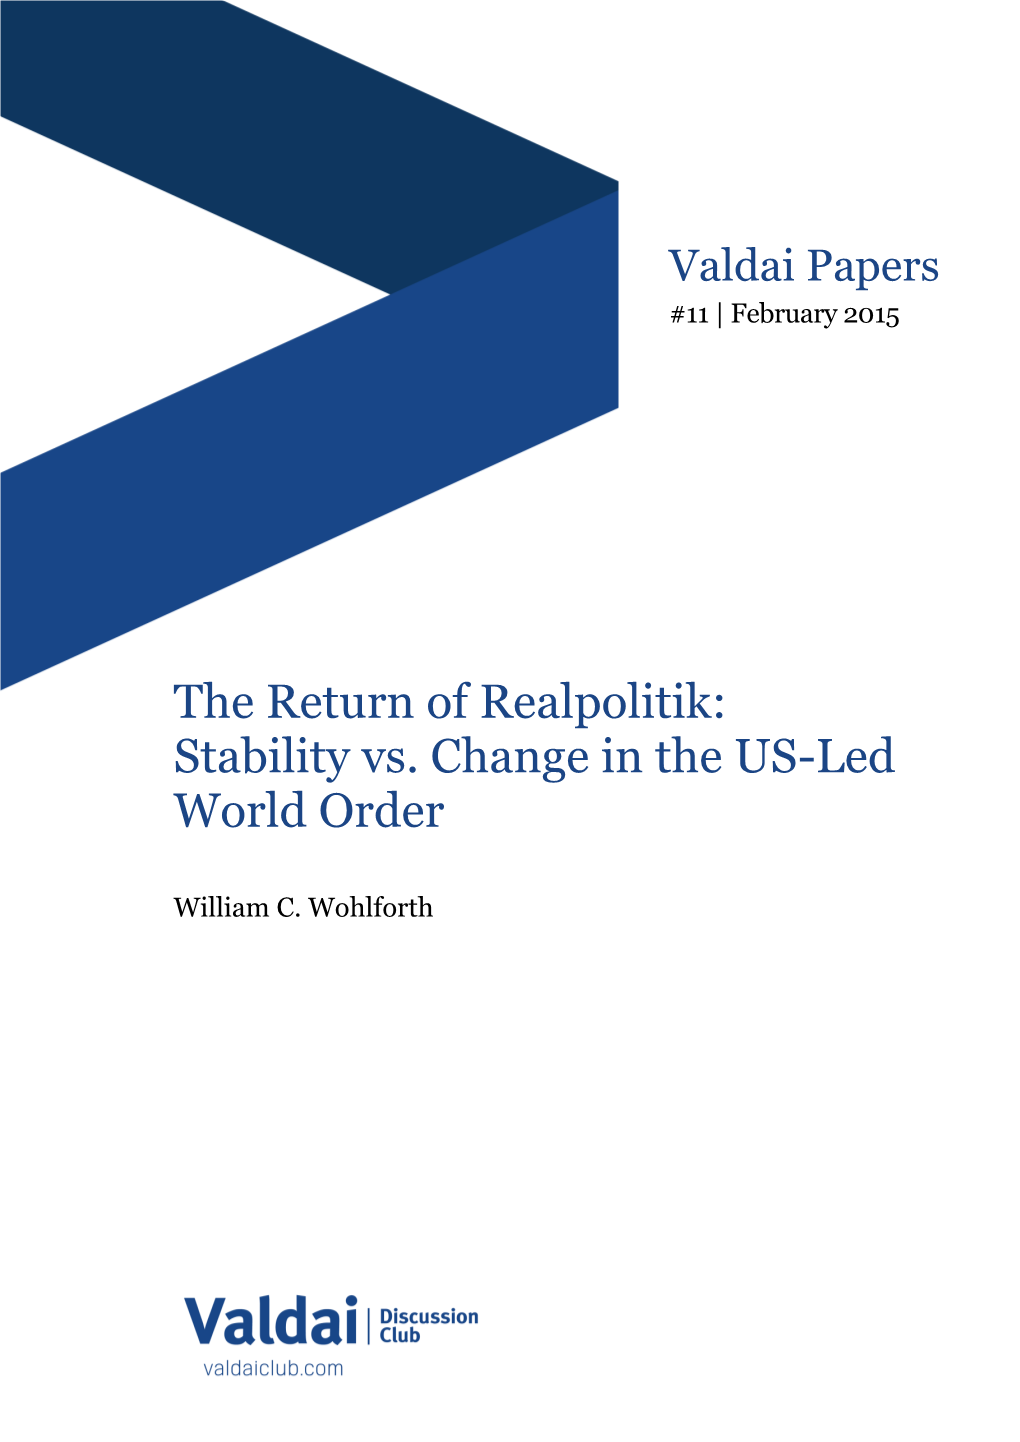 The Return of Realpolitik: Stability Vs. Change in the US-Led World Order